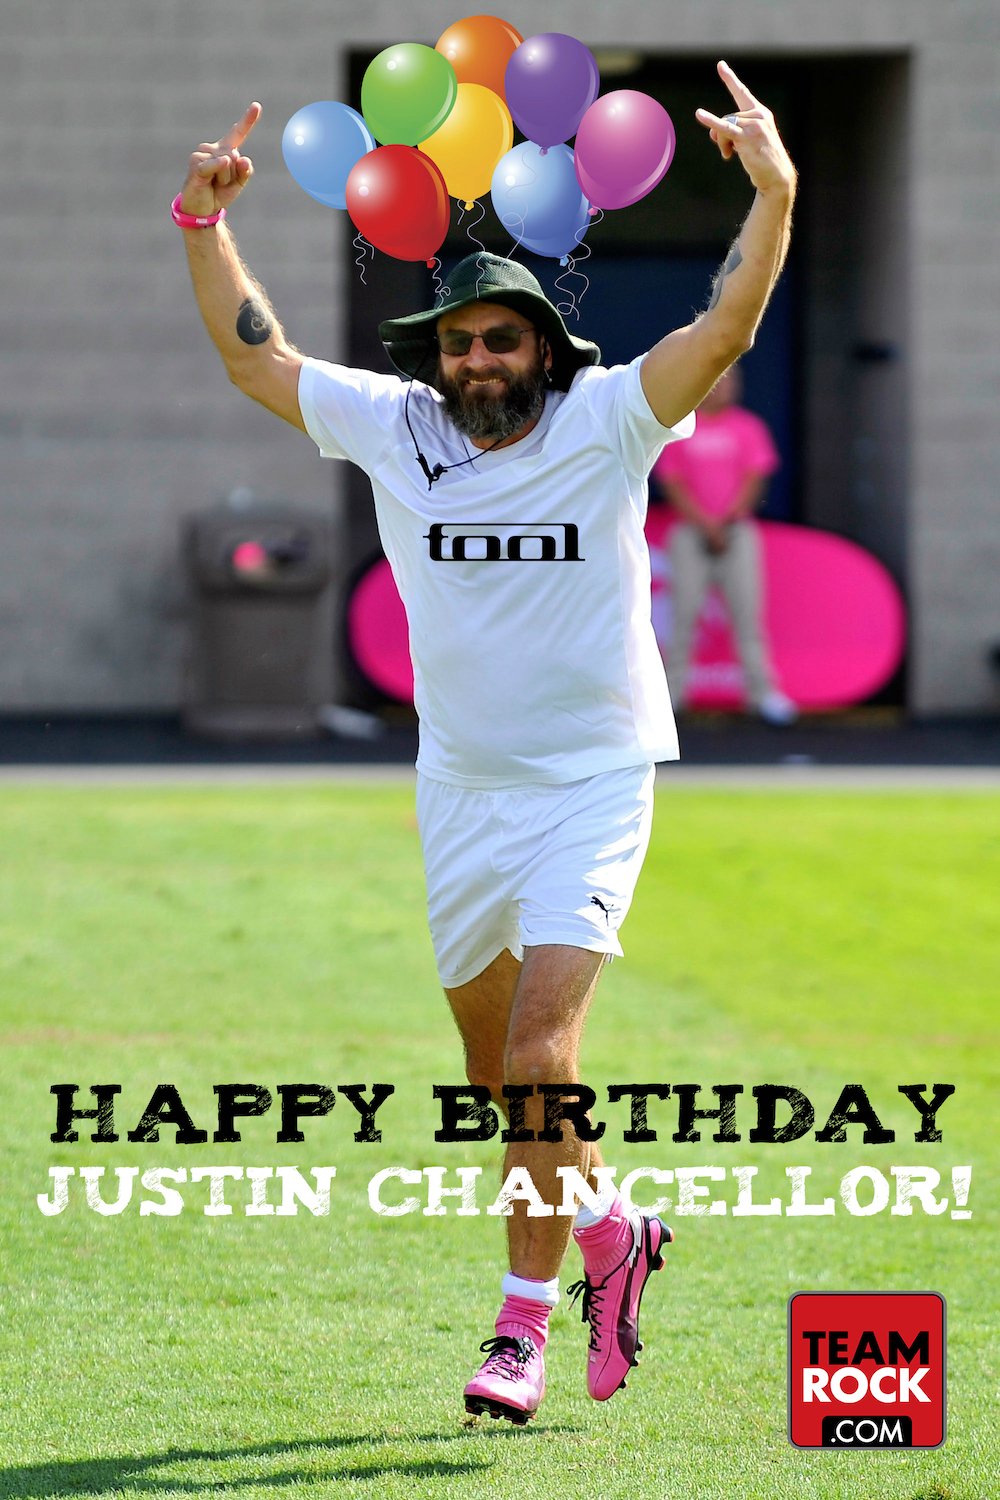 Happy birthday to bassist Justin Chancellor! 